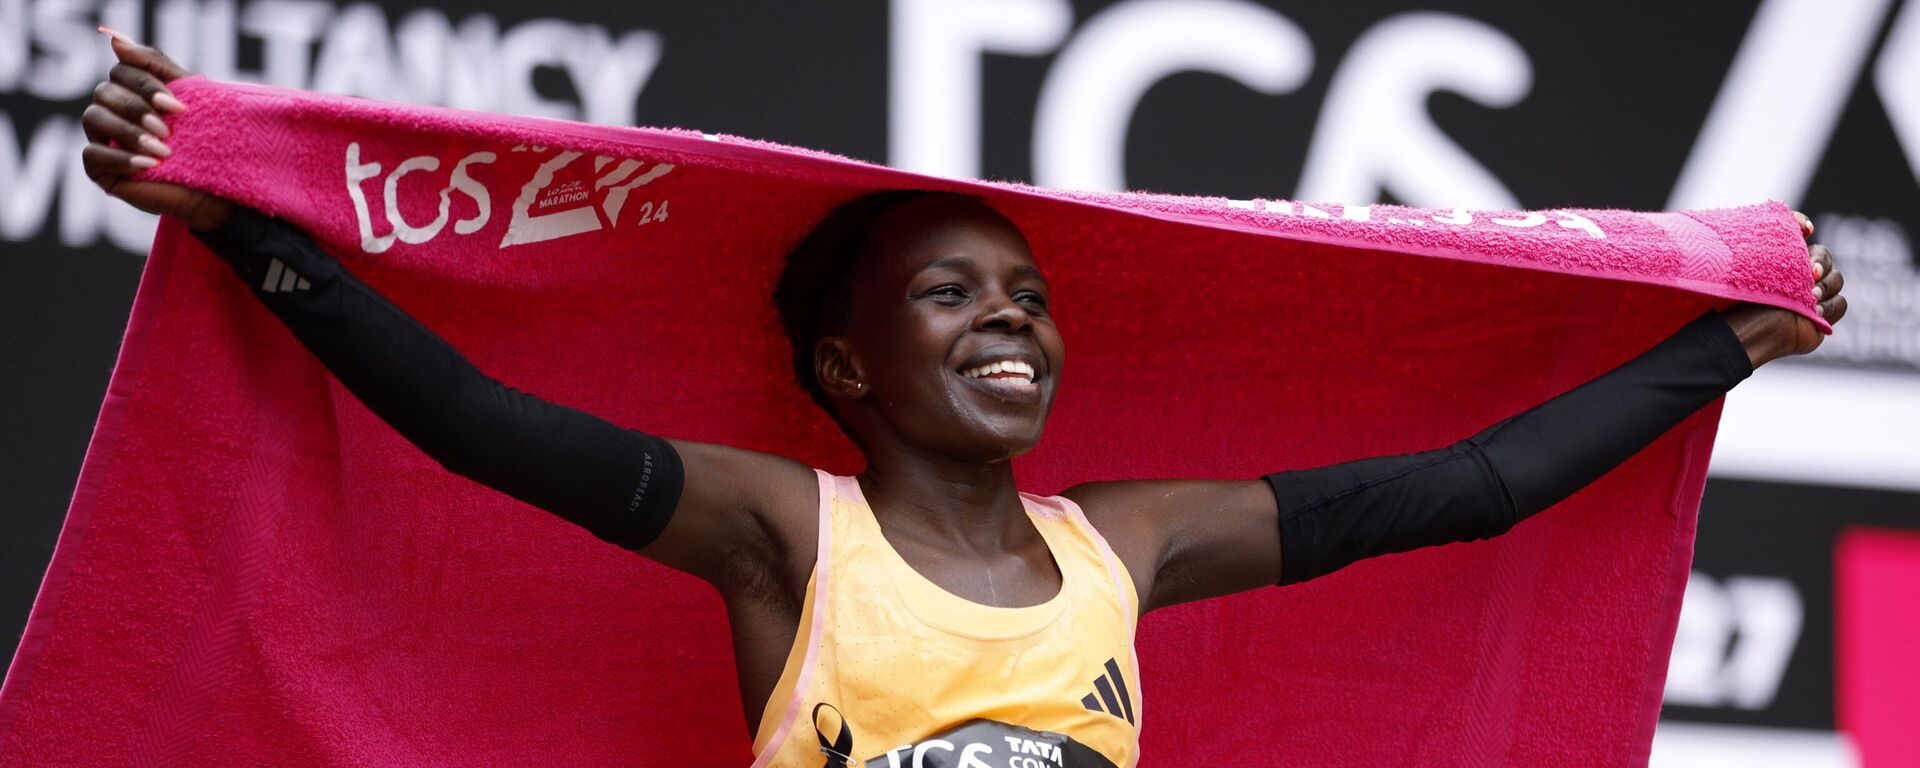 Peres Jepchirchir, atleta de Kenia, reacciona tras ganar la carrera femenina del Maratón de Londres, Reino Unido, el 21 de abril de 2024  - Sputnik Mundo, 1920, 21.04.2024